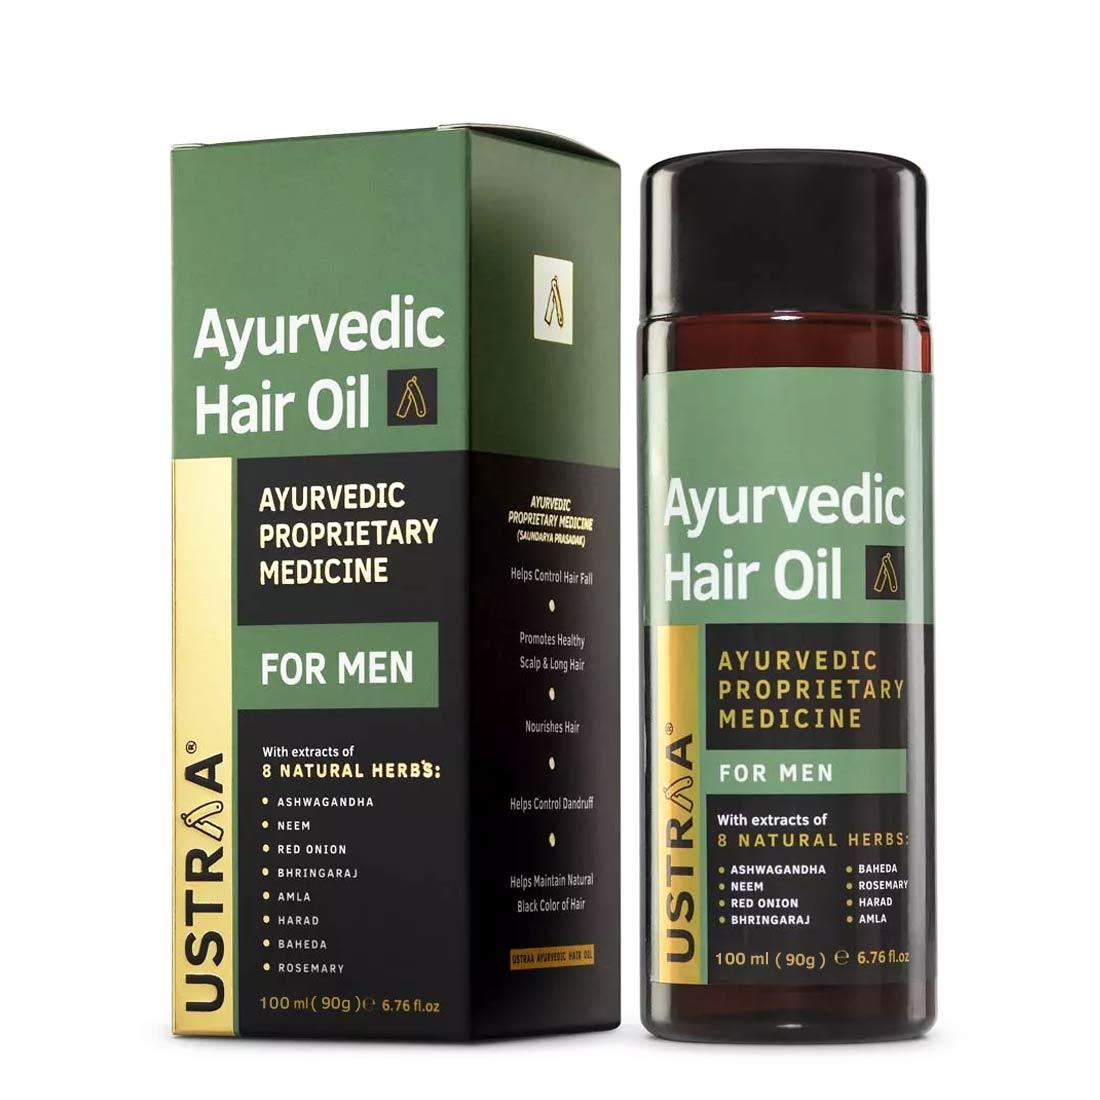 Ustraa's Ayurvedic Hair Oil for Men 100 ml - With Ayurvedic Ingredients like Sushruta, Charak, and Bhrigu